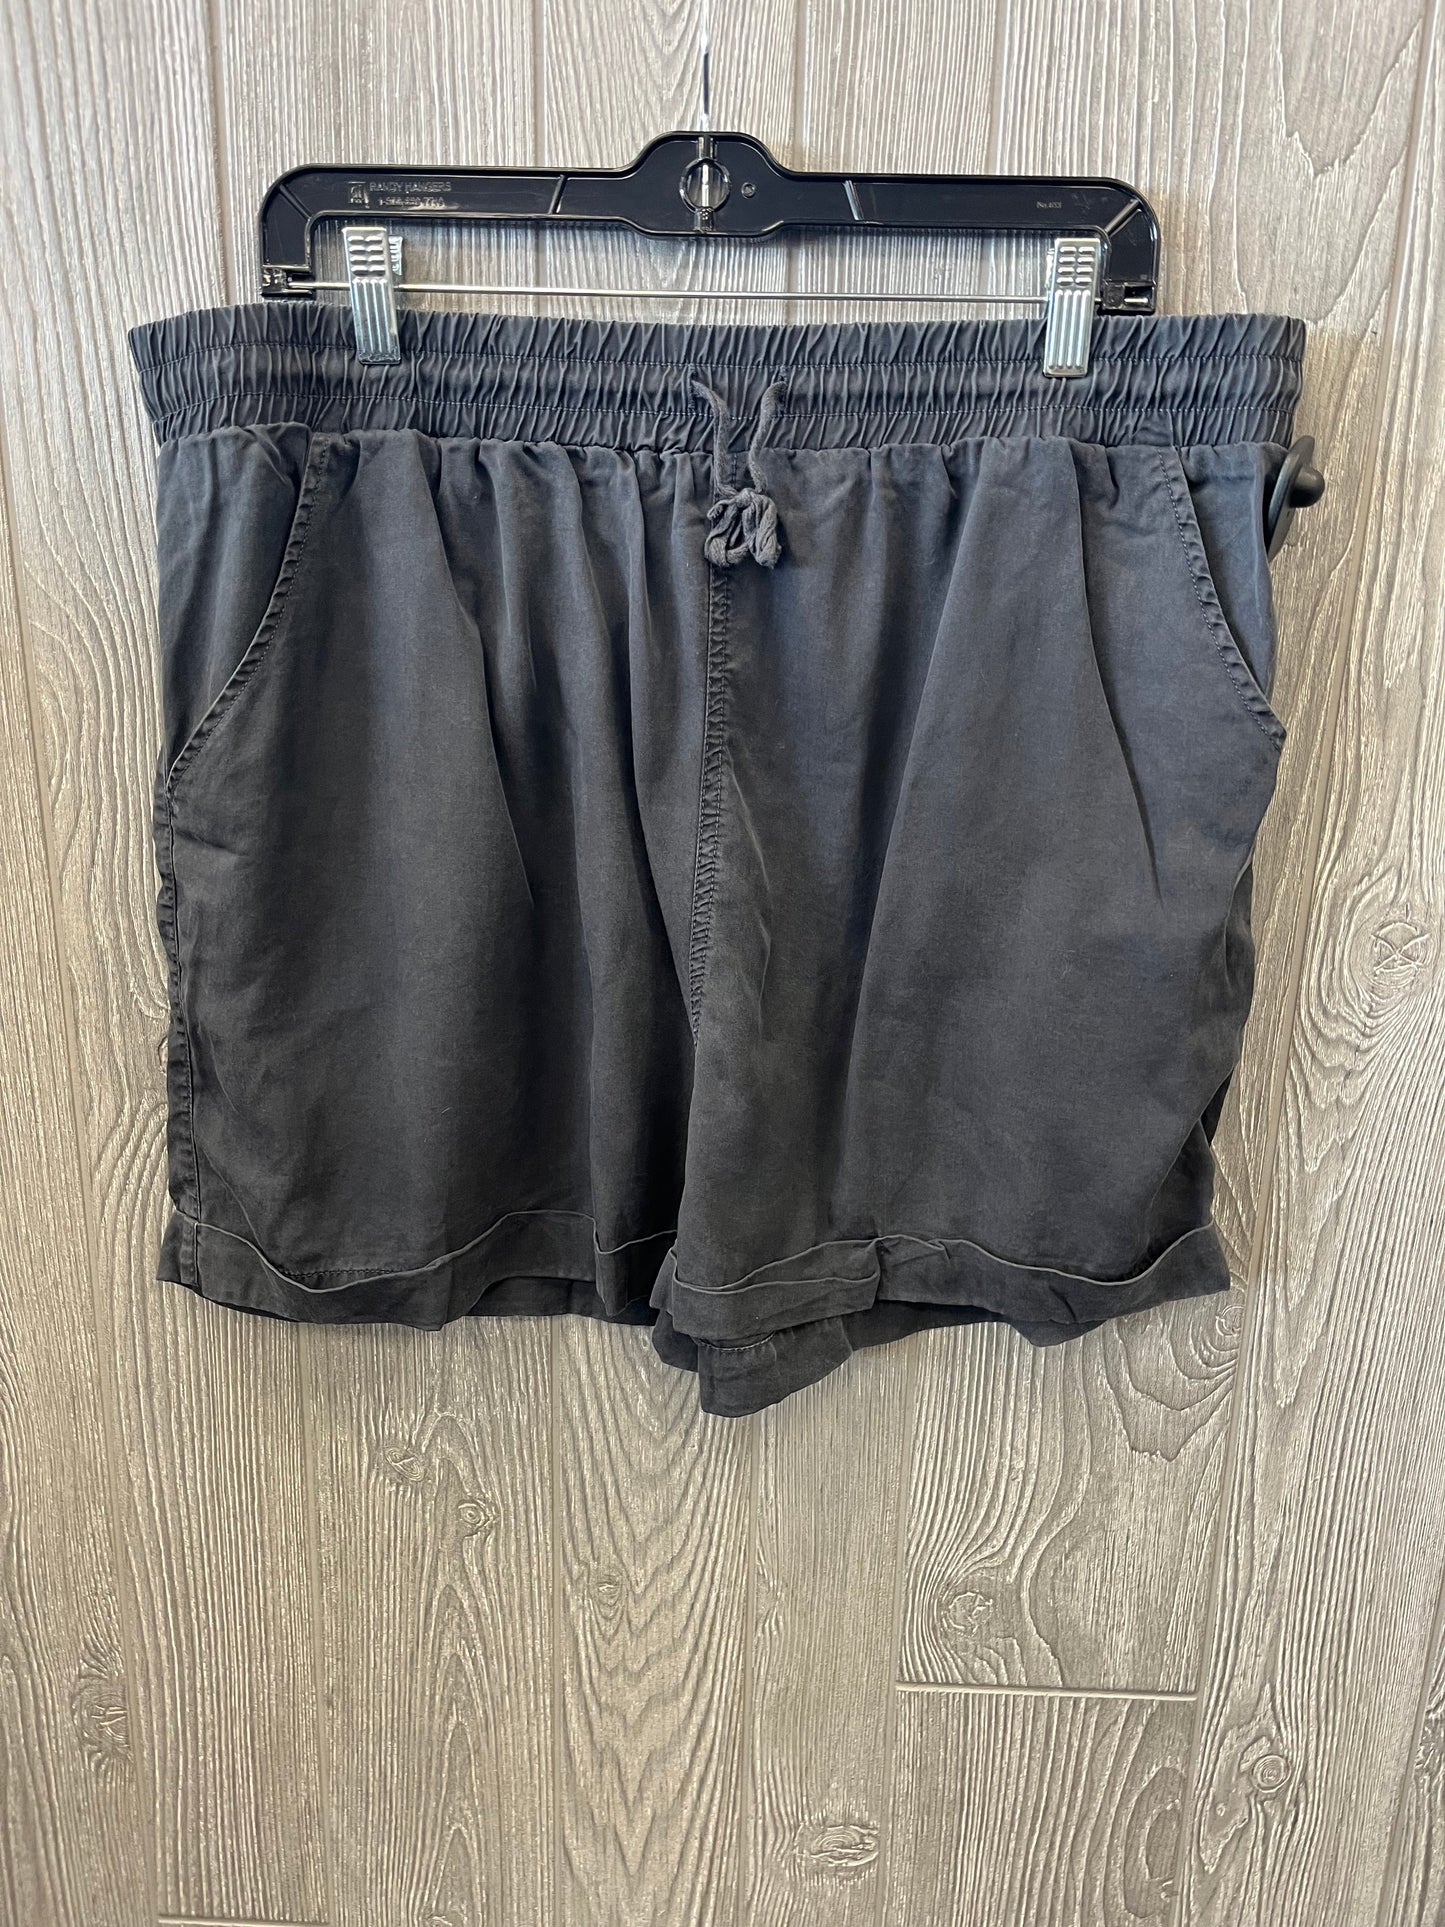 Shorts By Universal Thread  Size: Xxl